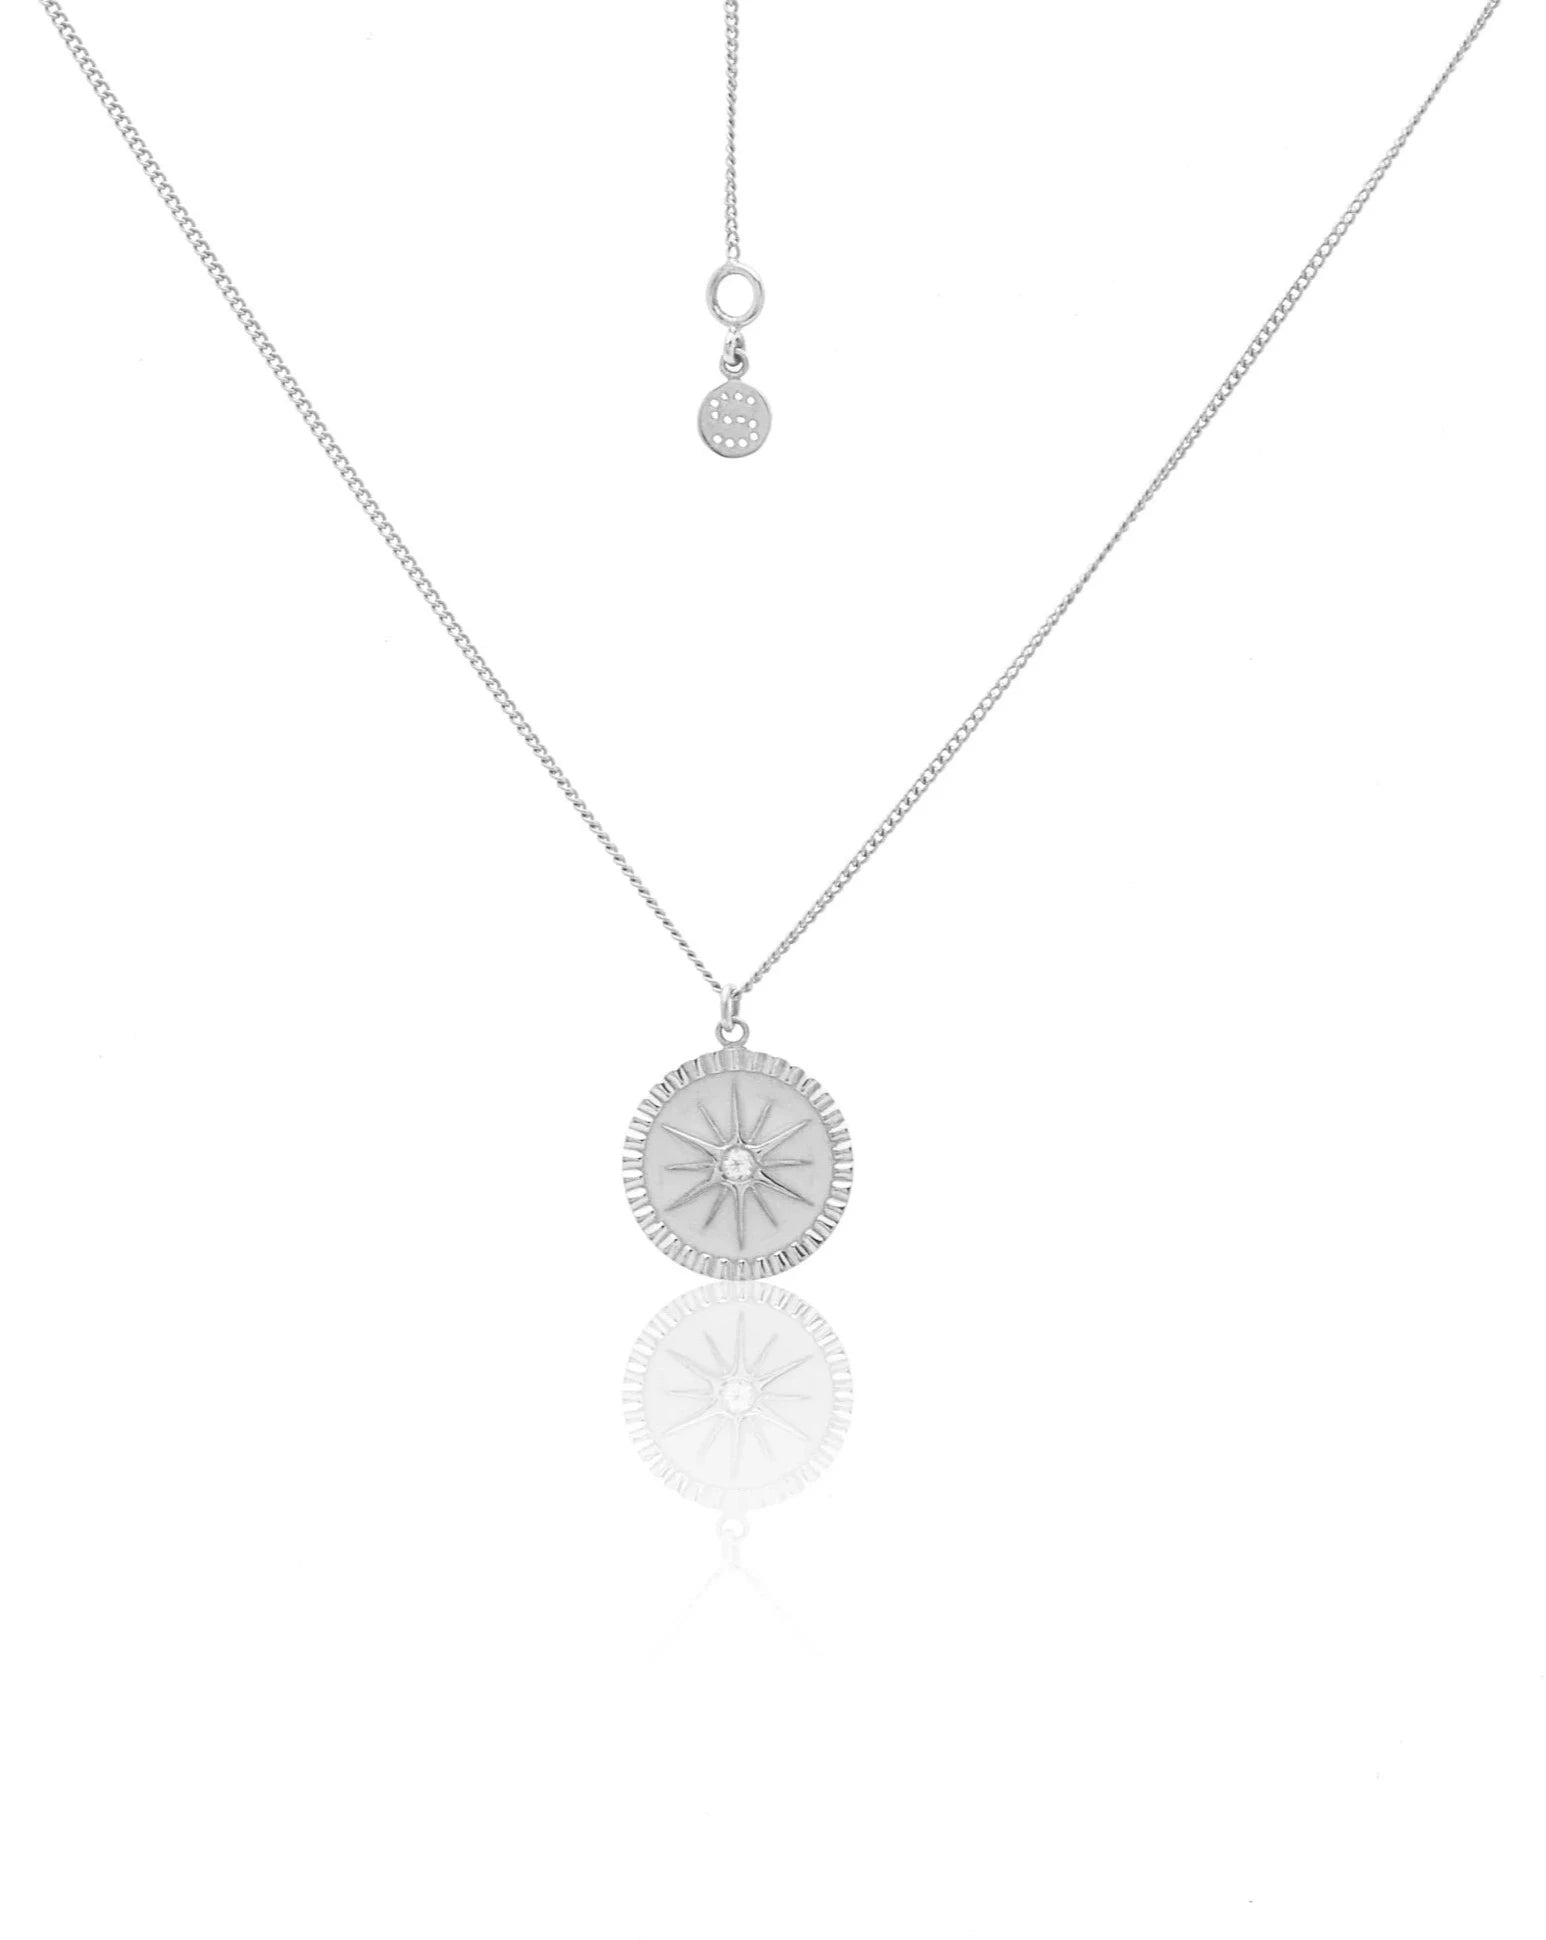 Silk & Steel Guiding Star Necklace - White Enamel/Silver